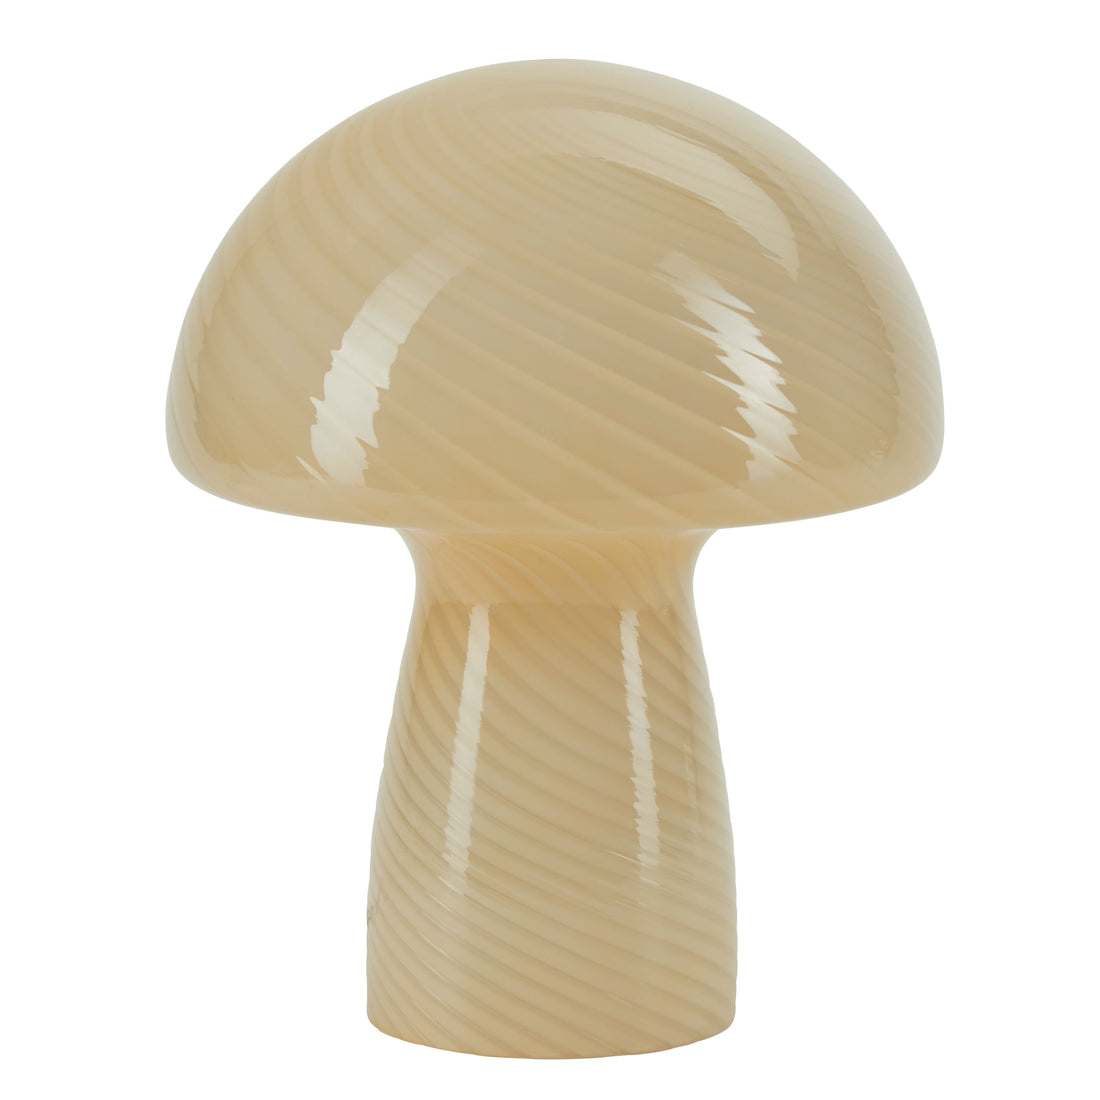 Bahne - Fungal lamp / Mushroom Table lamp, Yellow - H23 cm.